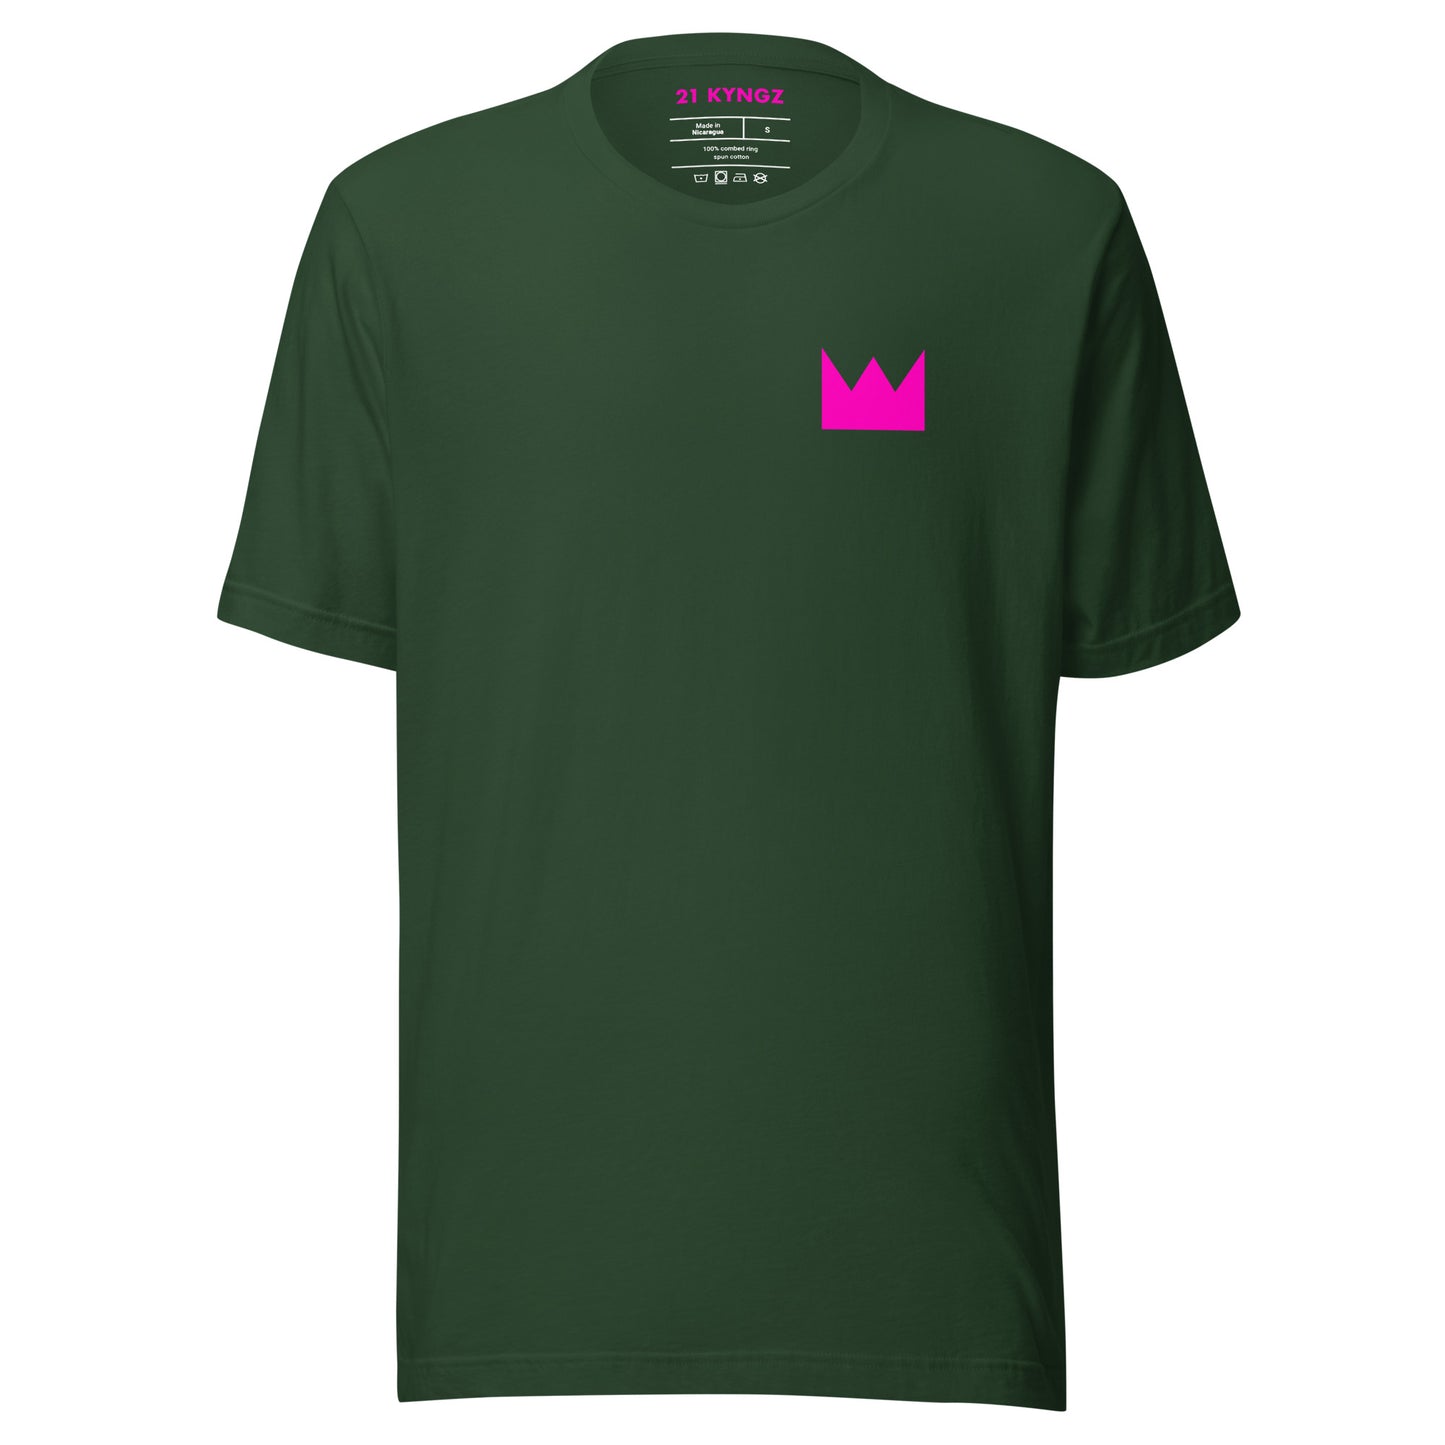 21 KYNGZ Crown (Pi) Unisex T-shirt